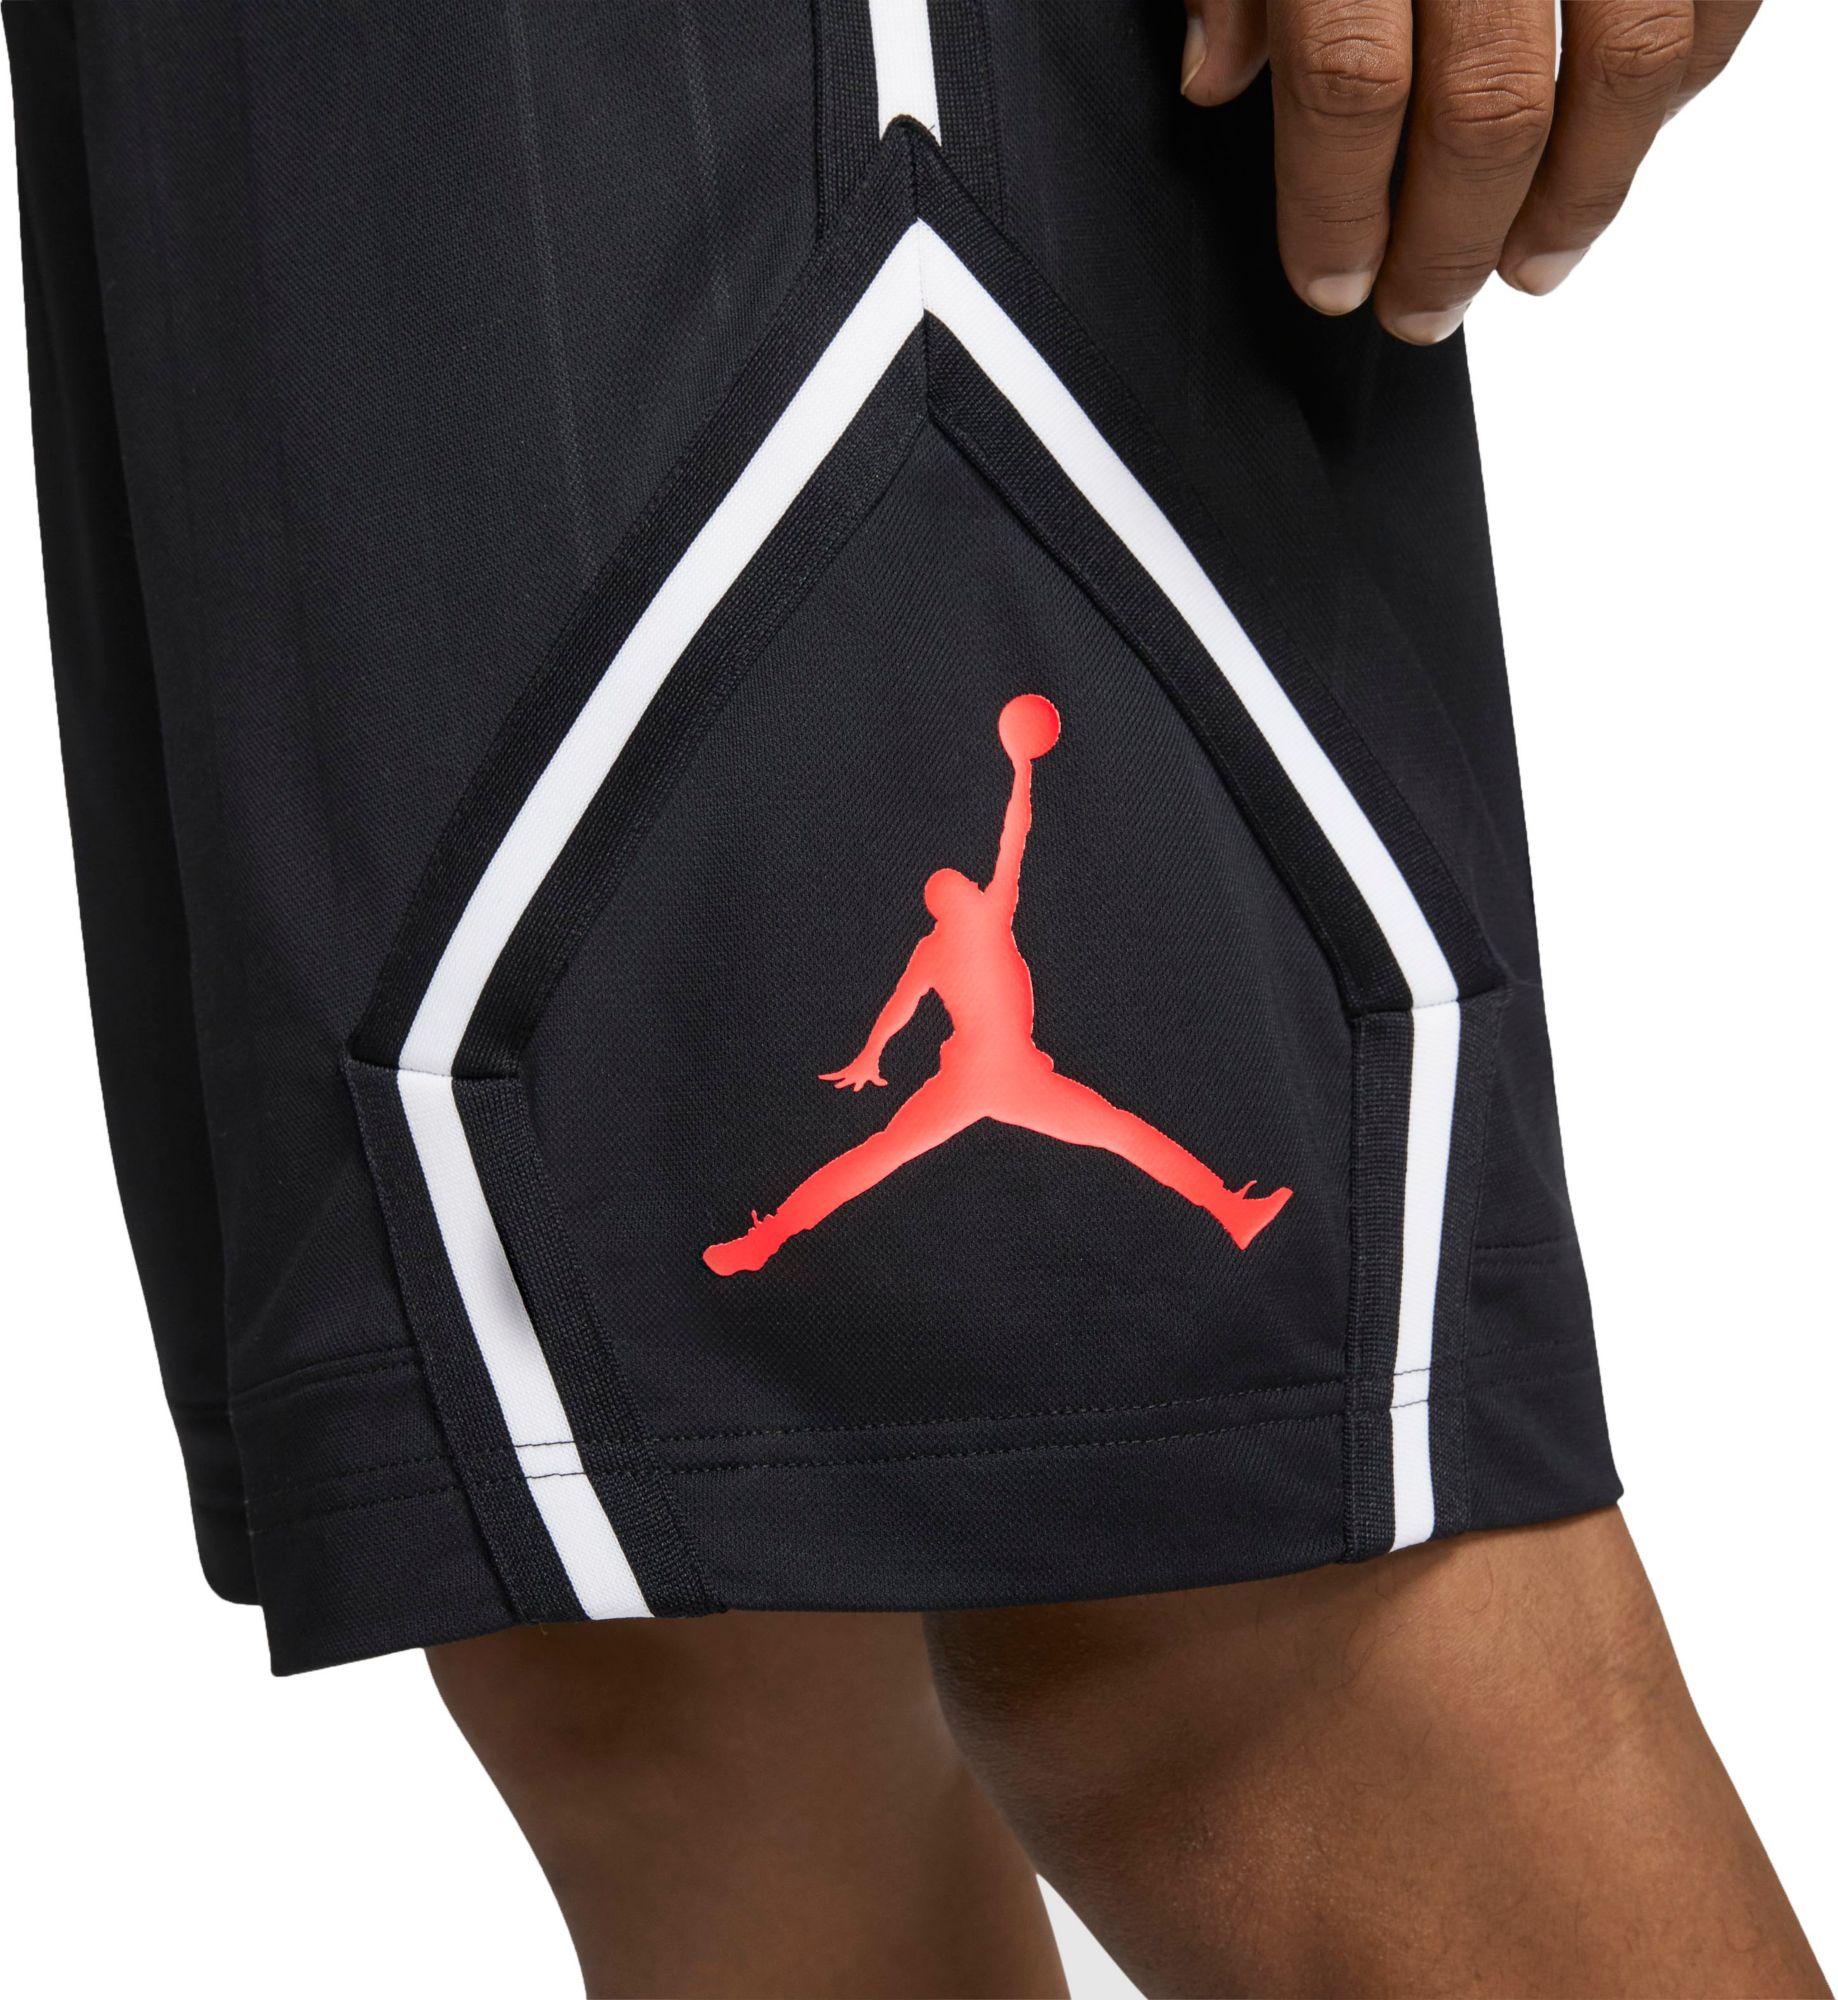 Nike Jumpman Diamond Shorts in Black/Black (Black) for Men - Lyst